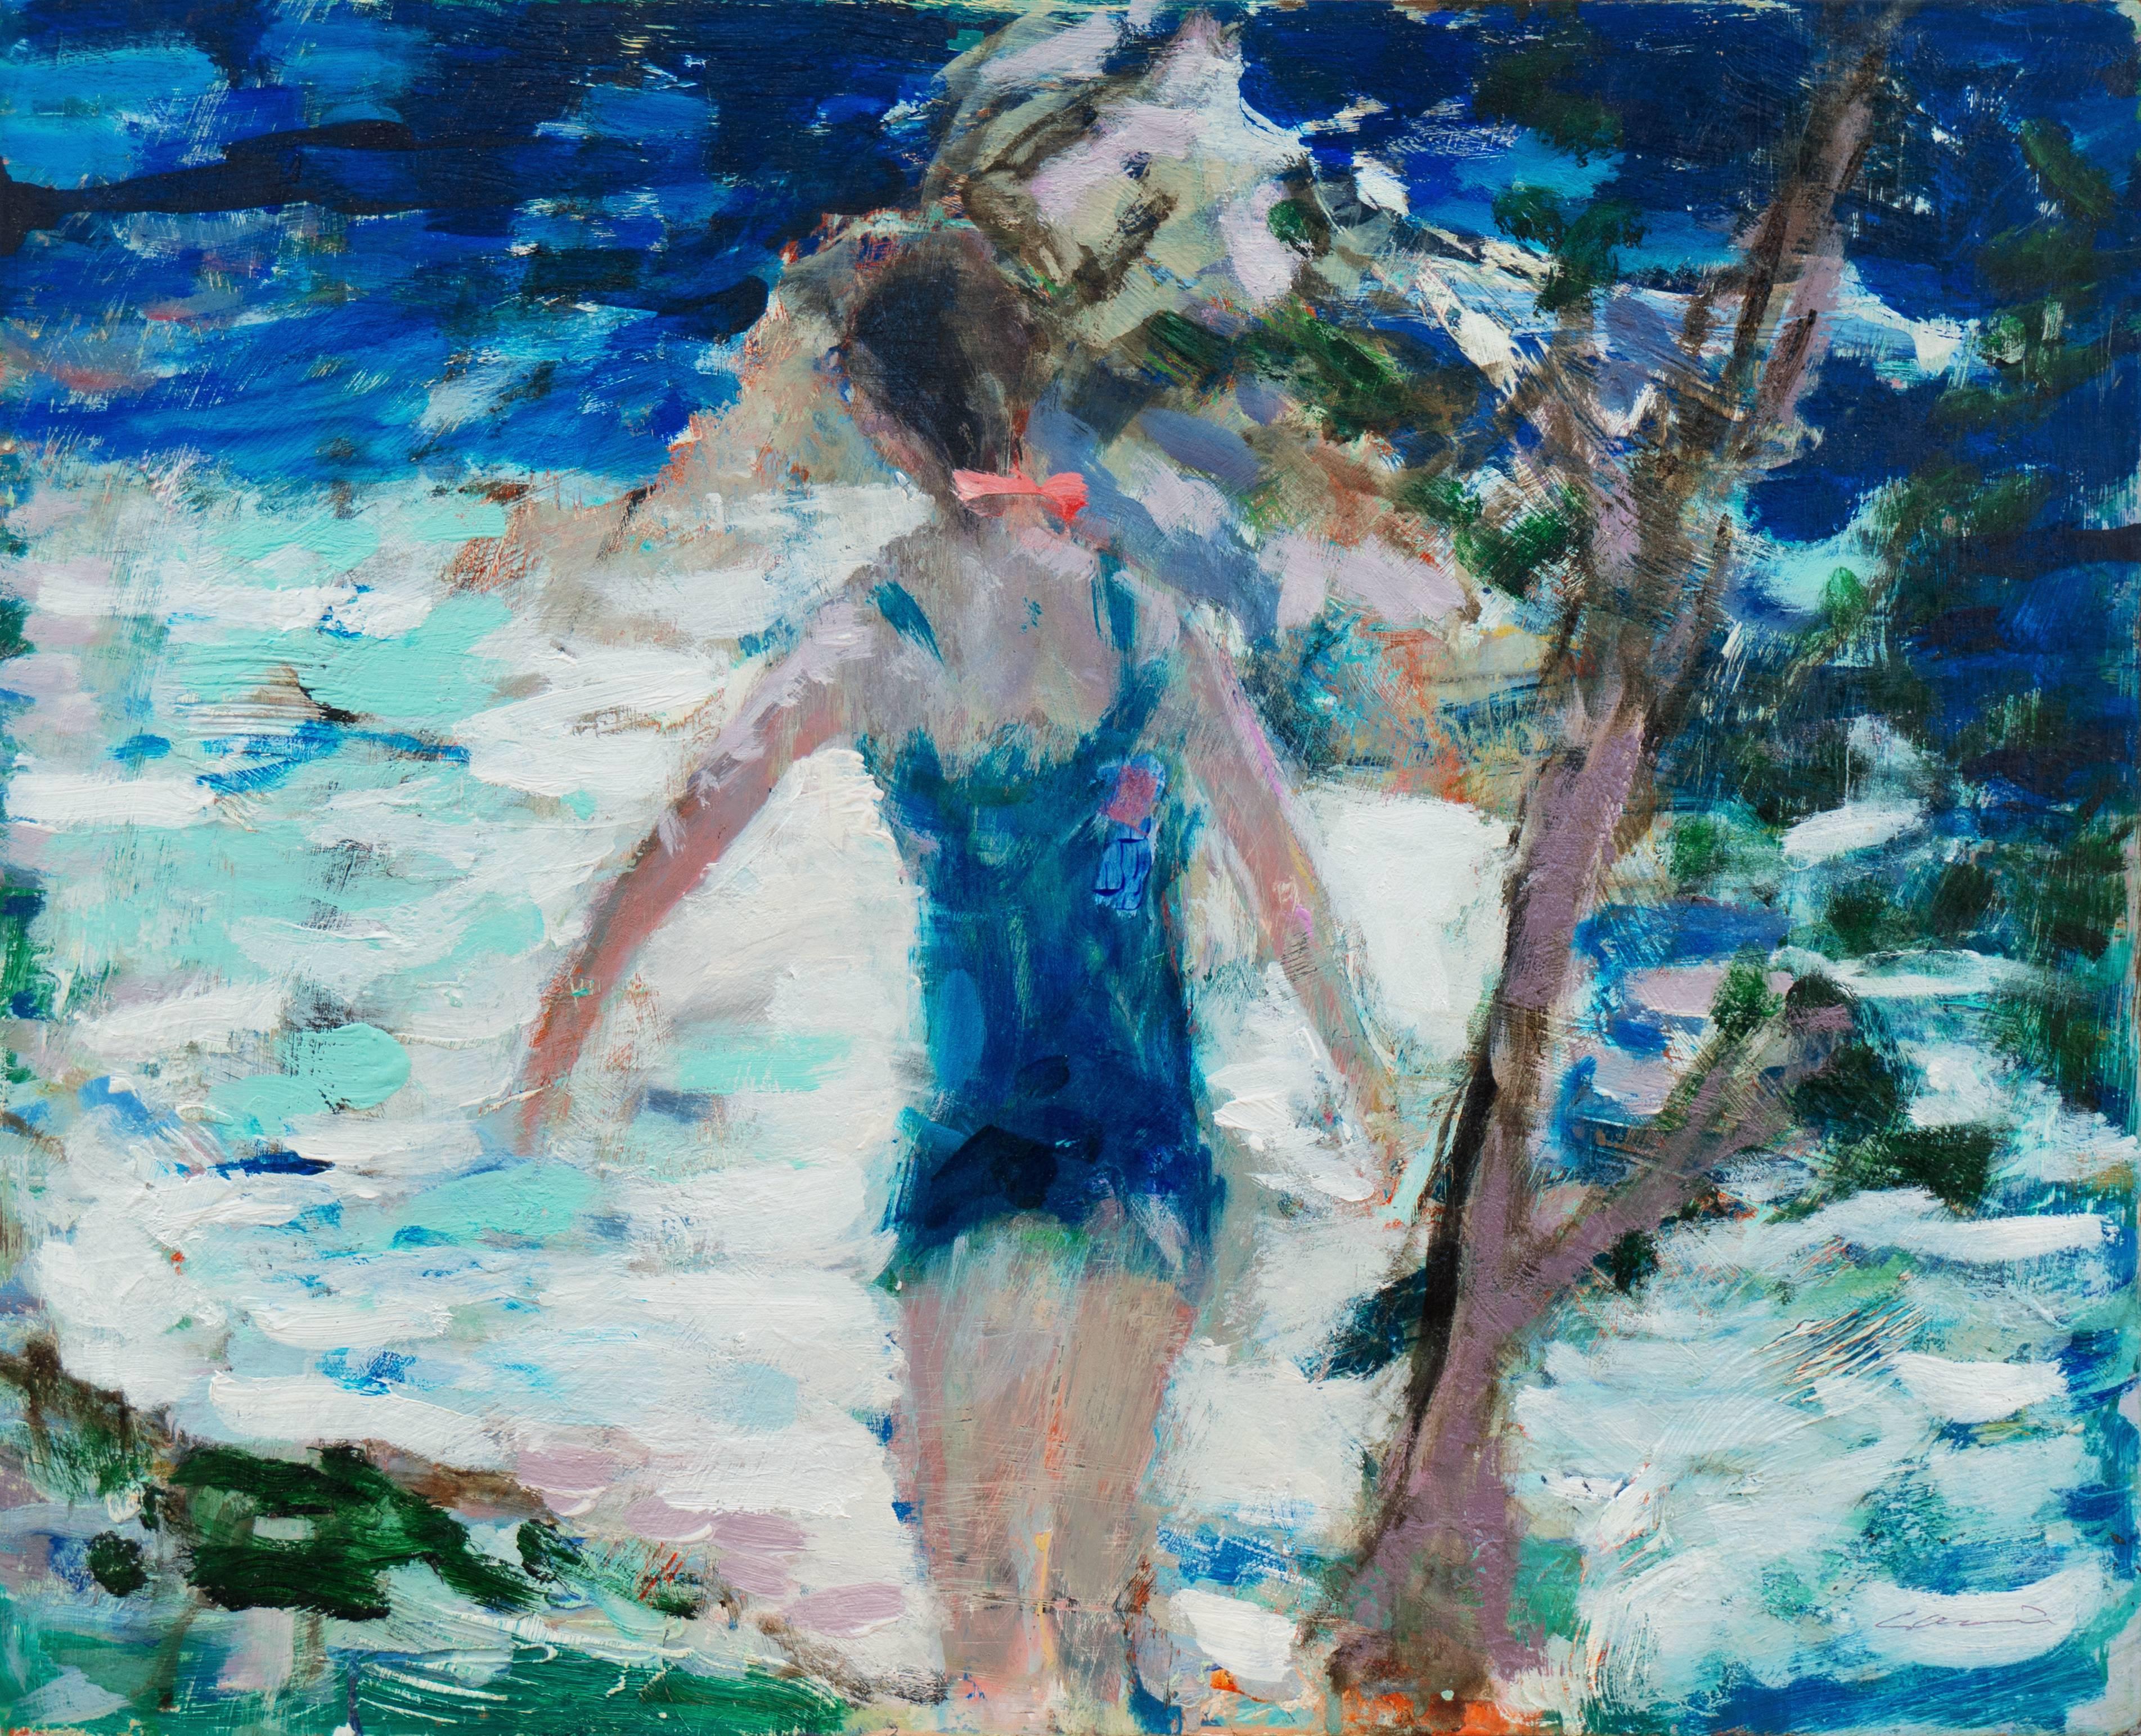 Robert Canete Landscape Painting – „Junge Jungfrau beim Baden, Carmel“, kalifornische Postimpressionistin, Stanford, Big Sur